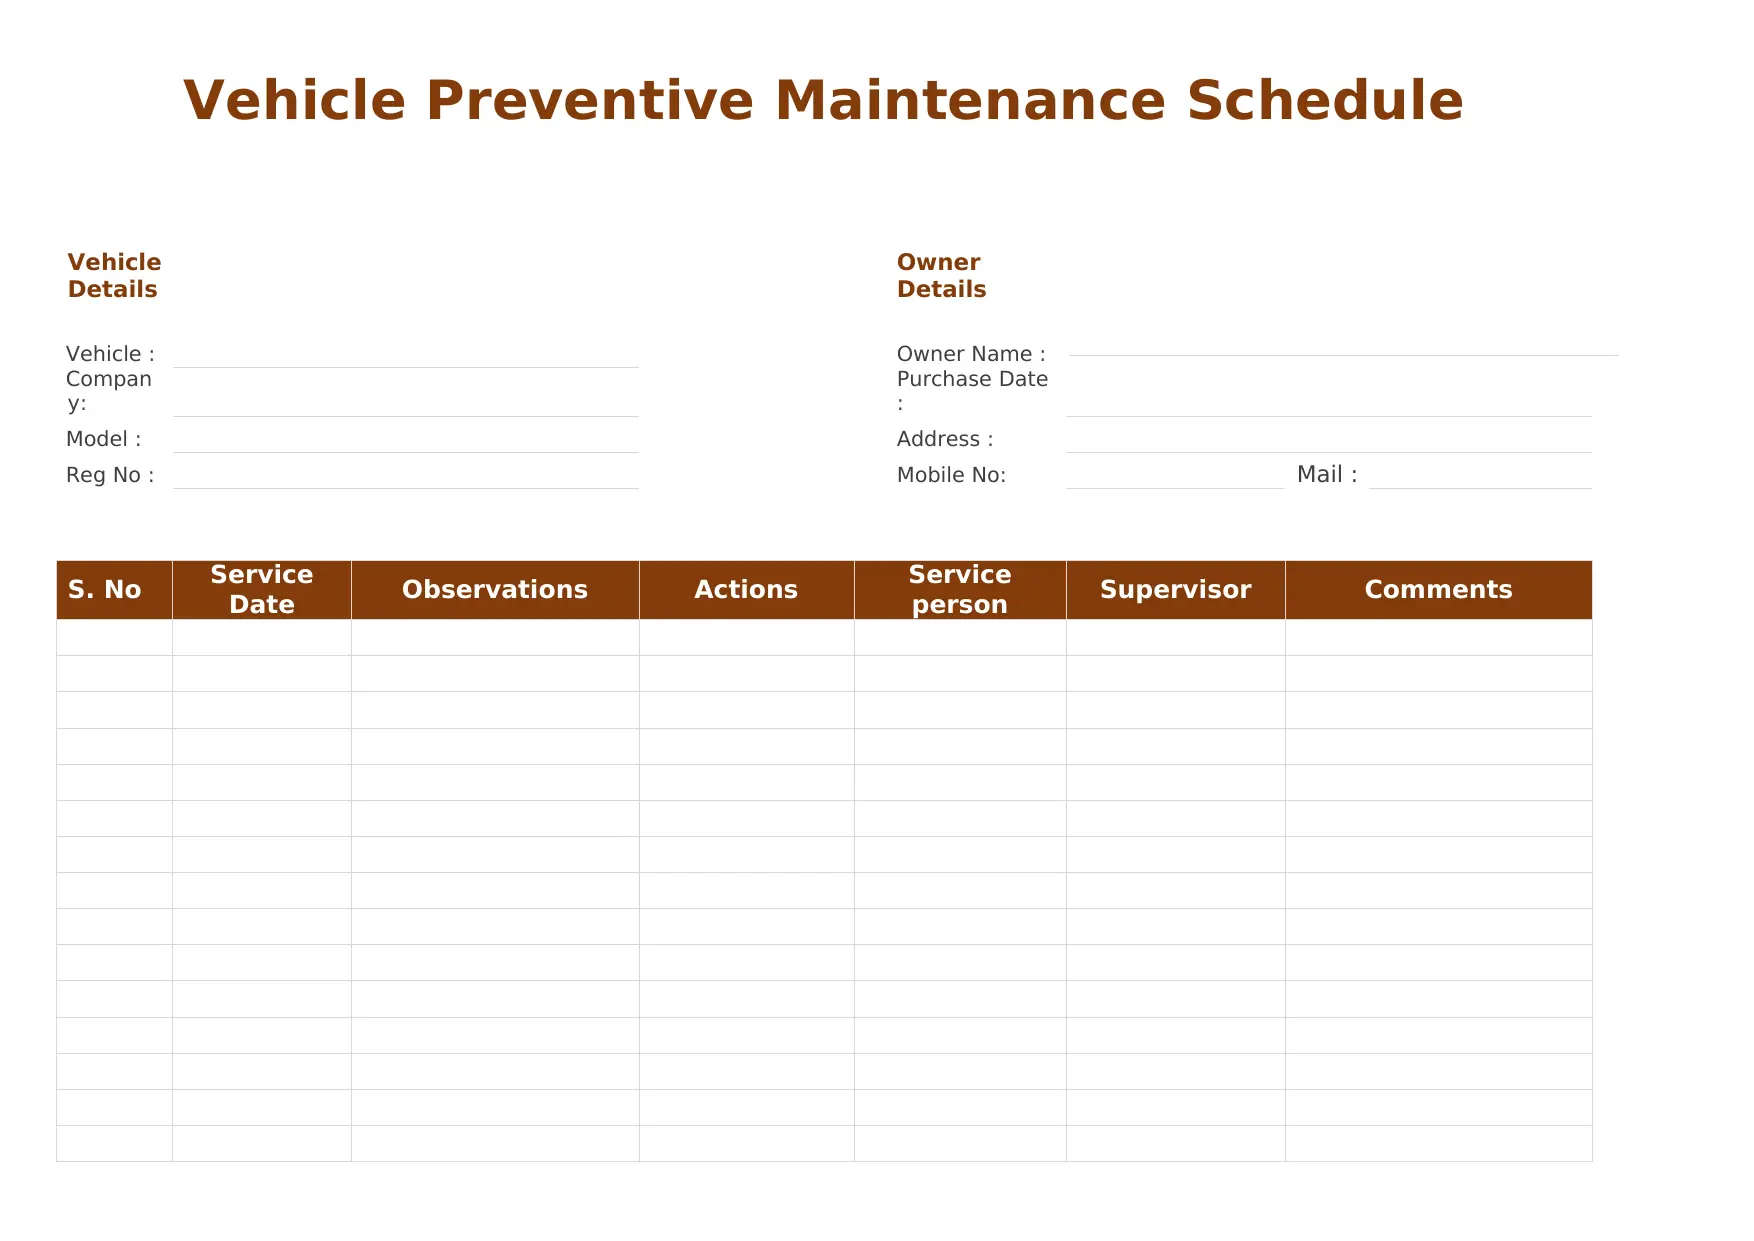 Vehicle Preventive Maintenance Schedule Template